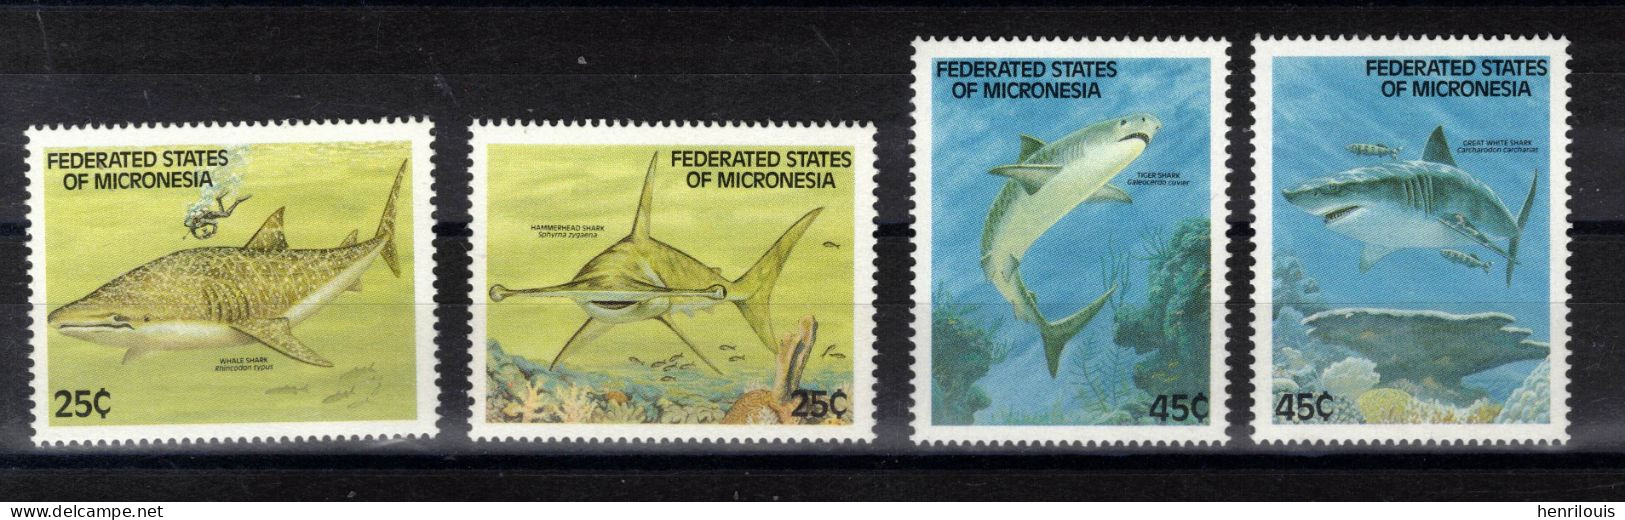 MICRONESIE    Timbres Neufs ** De 1989  ( Ref 4953 A )Faune Marine - Requins - Mikronesien